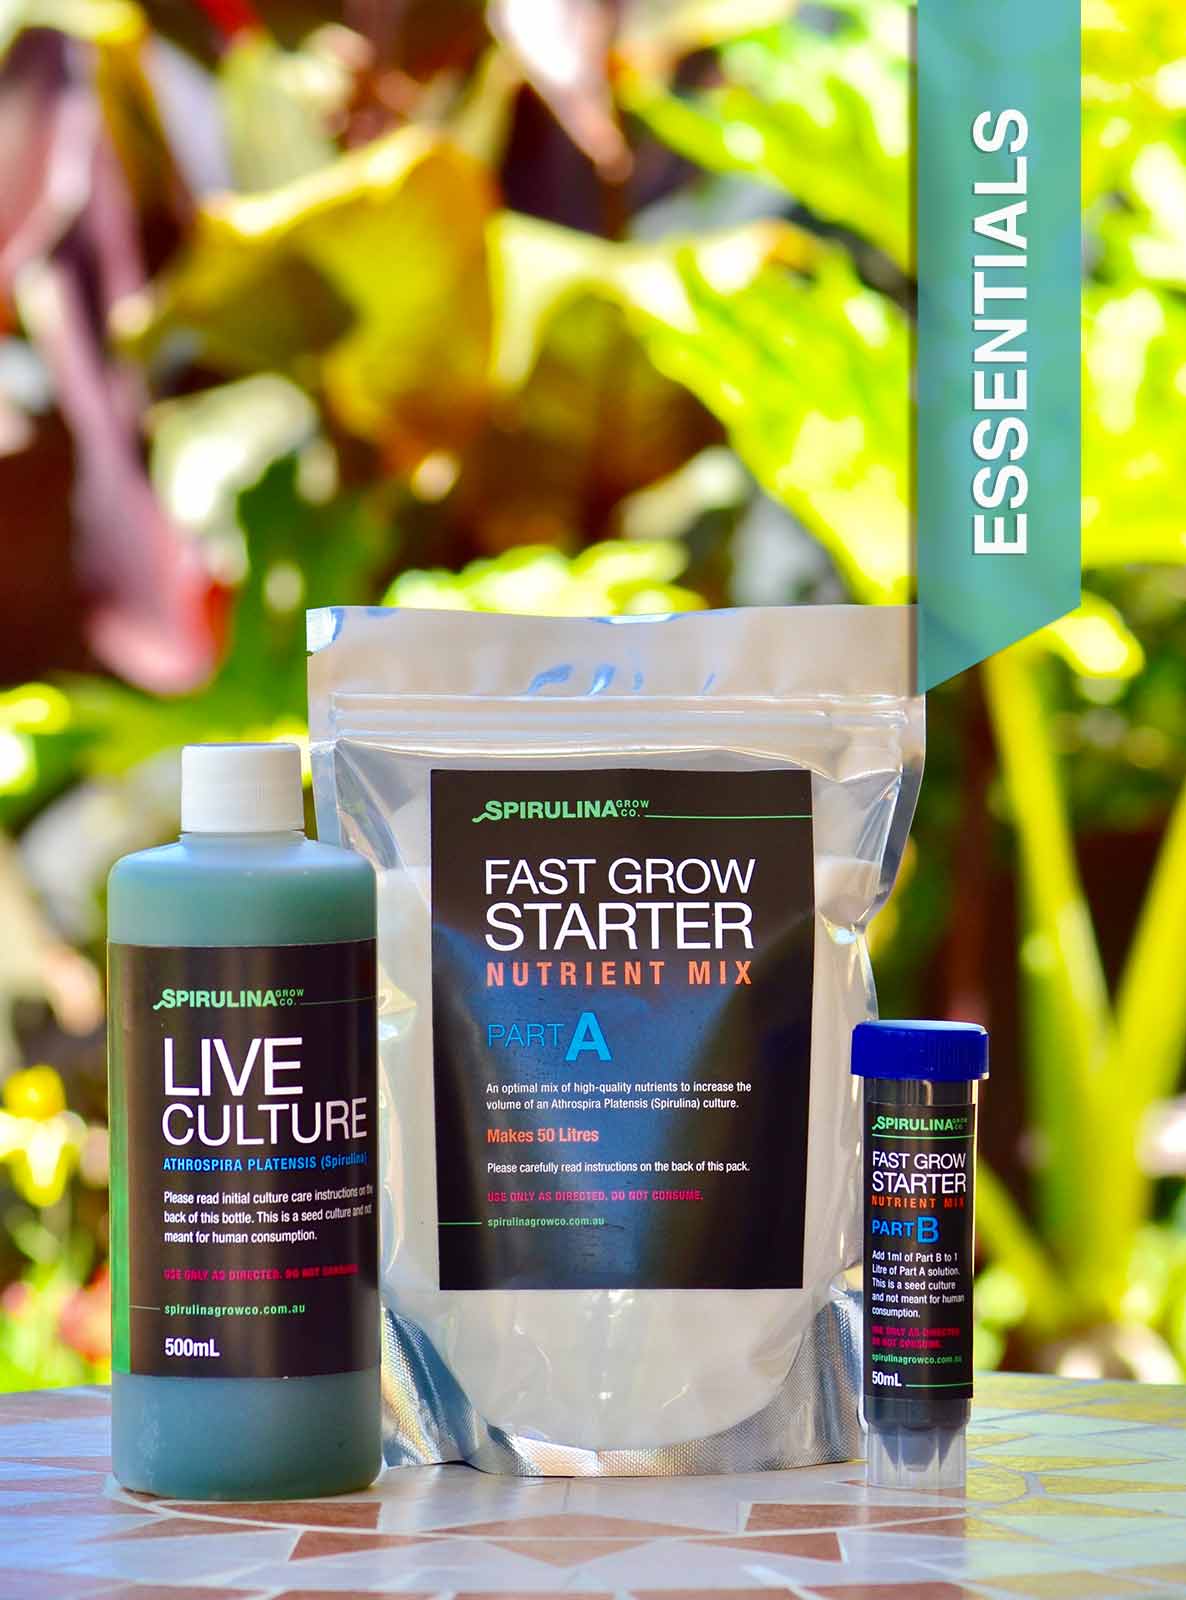 Spirulina Live Culture 500ml fast grow nutrient pack Australia